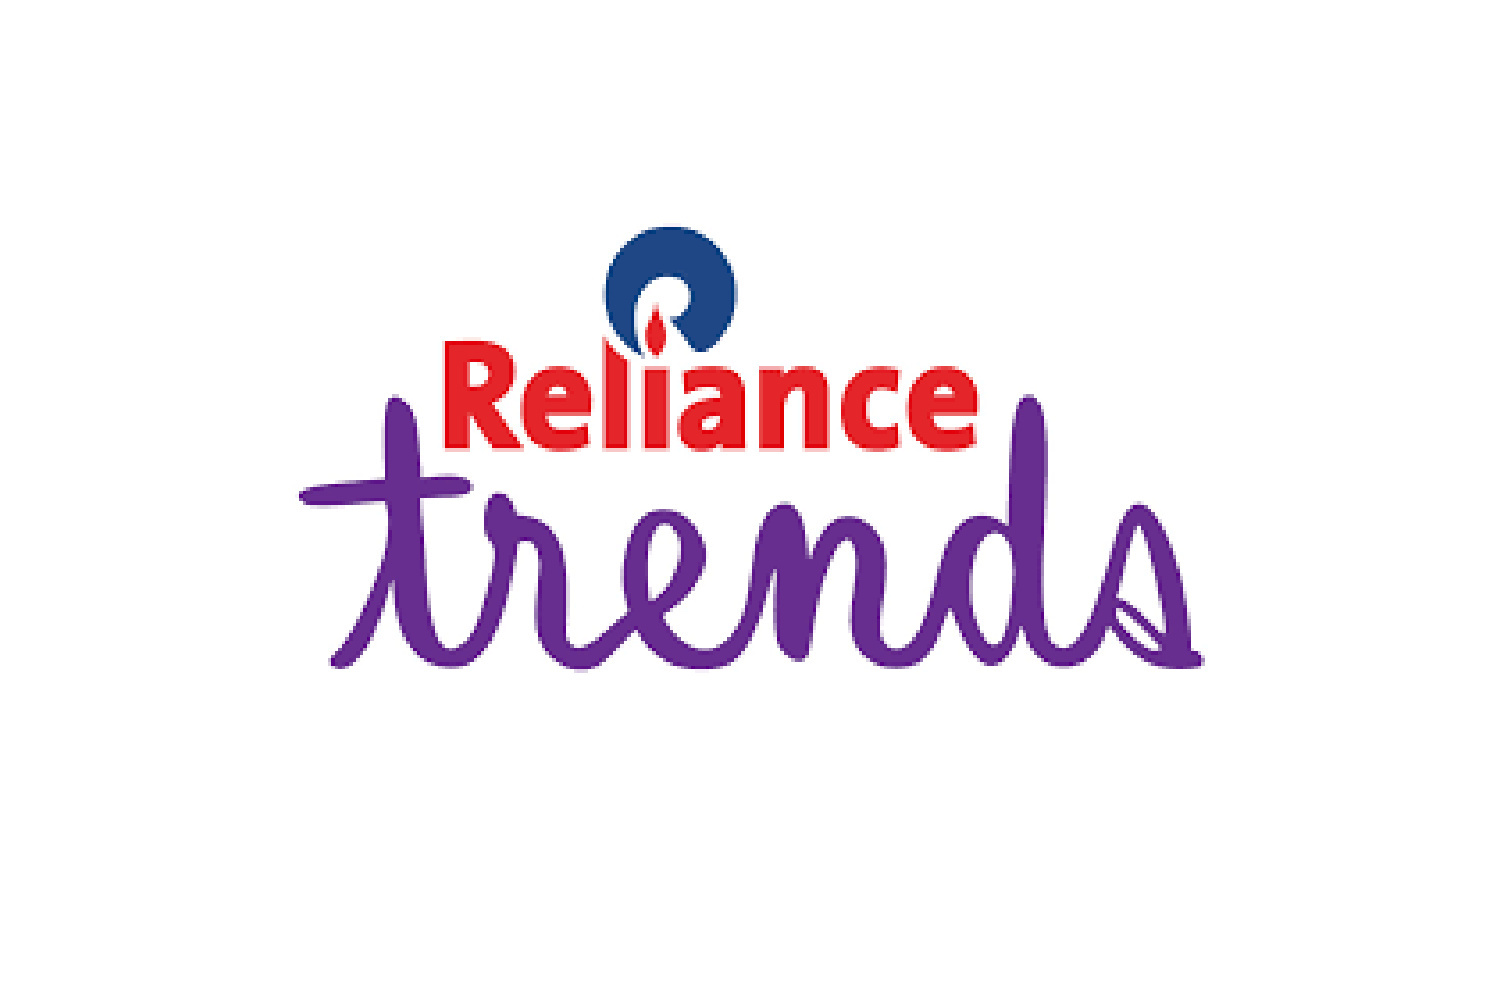 Reliance Trends